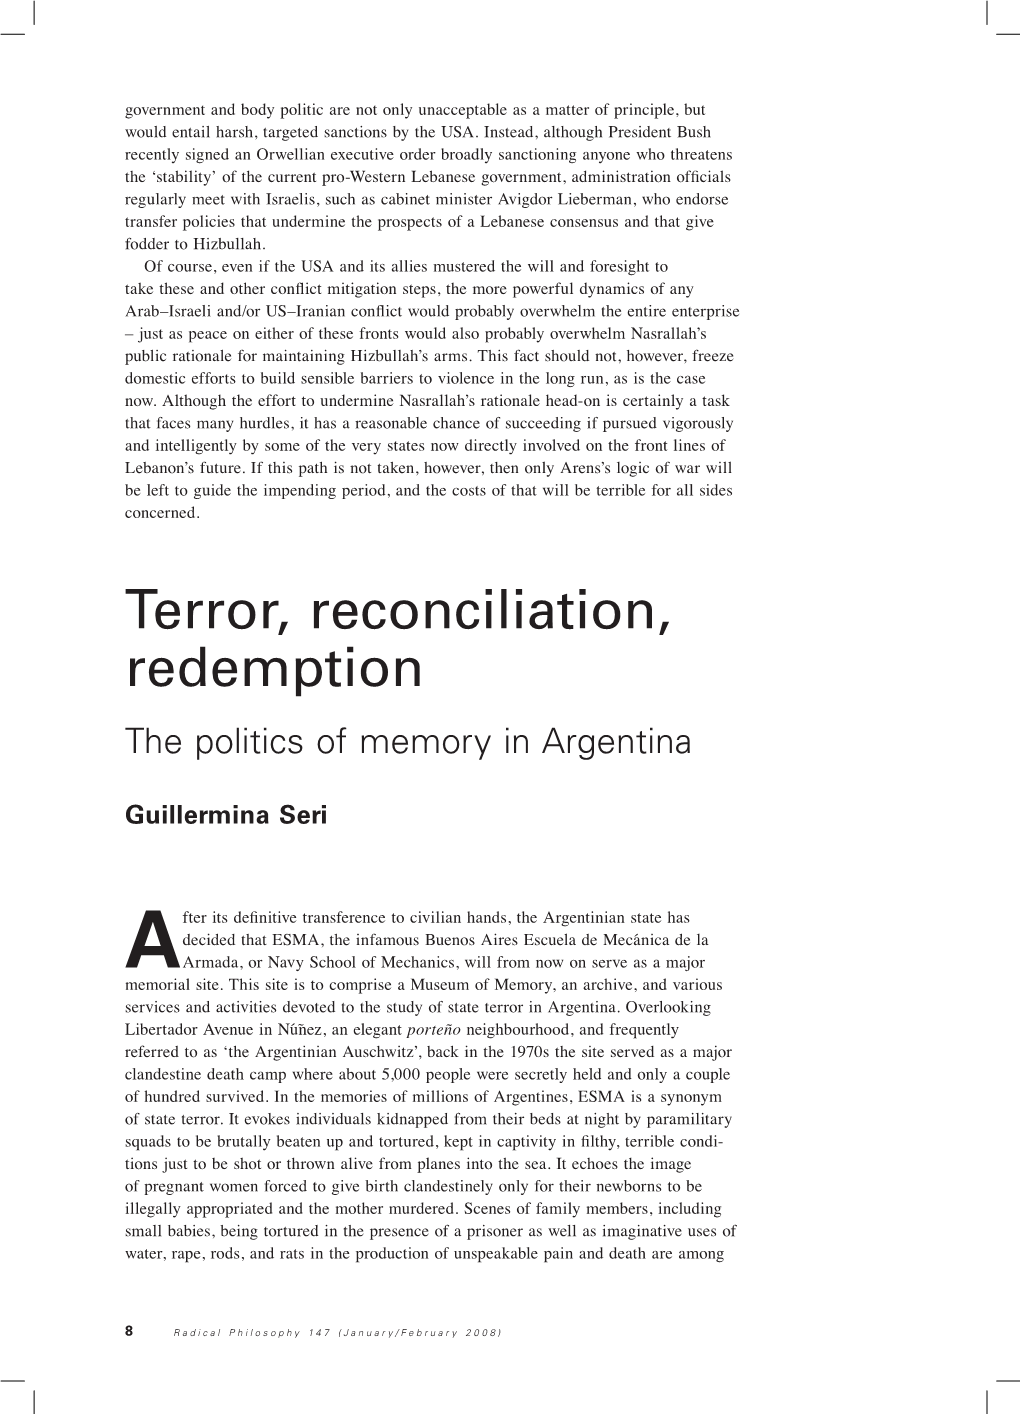 Terror, Reconciliation, Redemption the Politics of Memory in Argentina